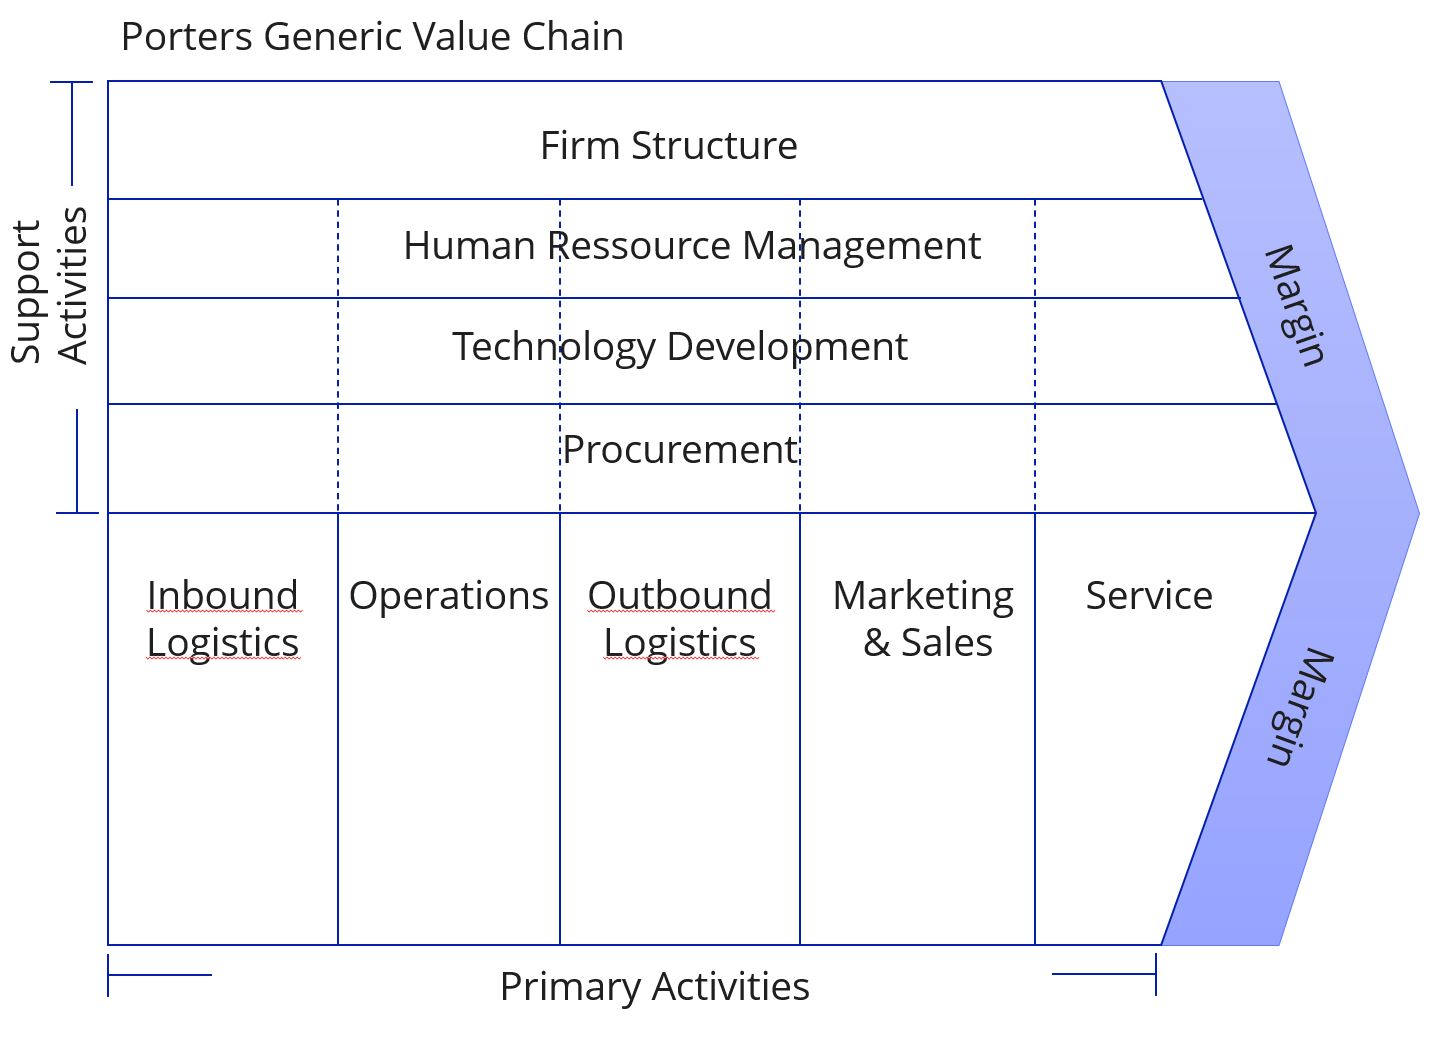 Porters generic value chain